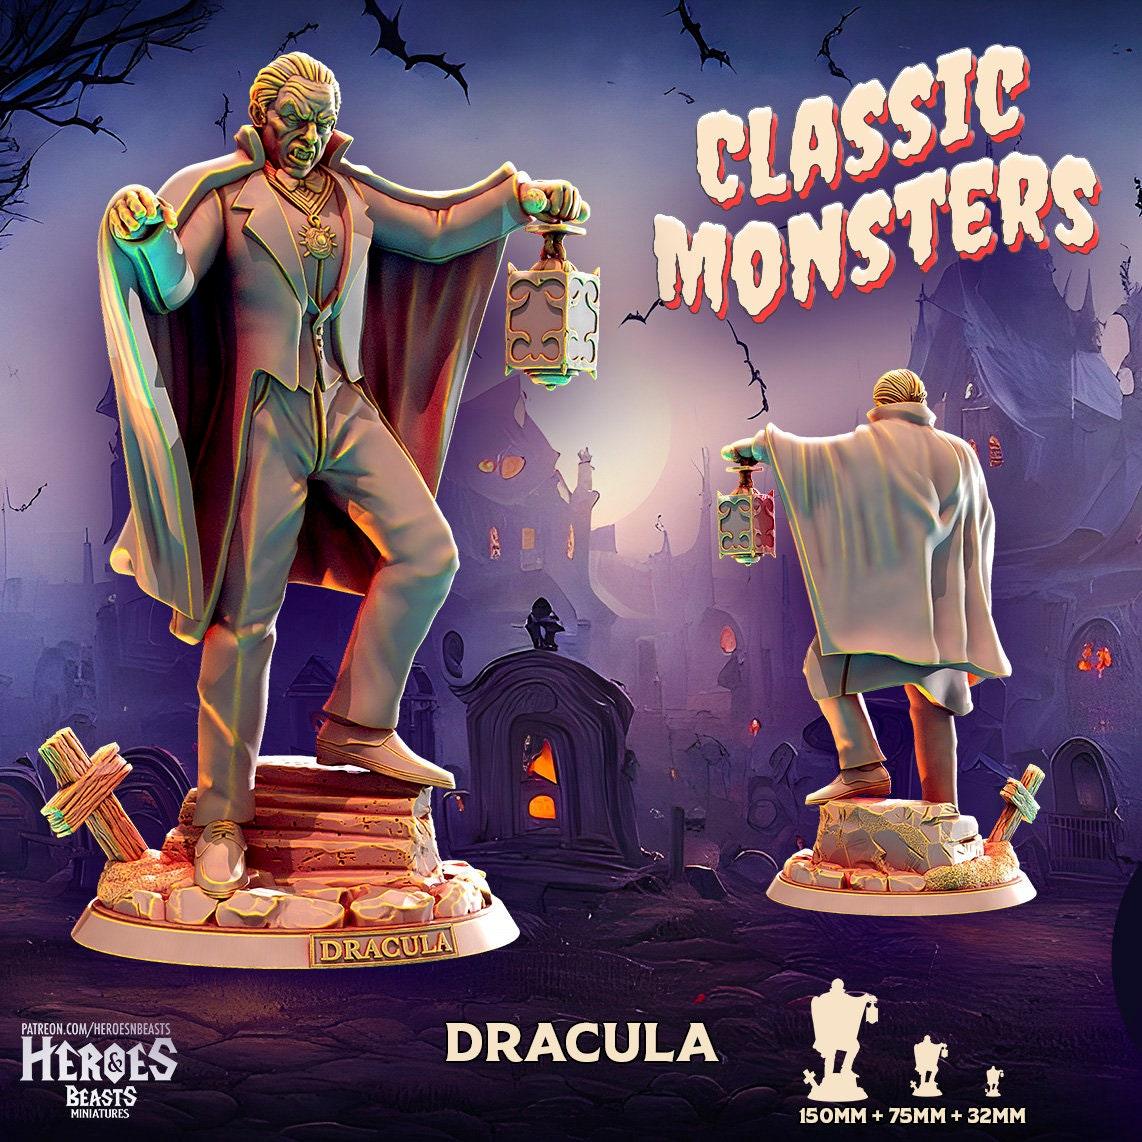 Dracula Miniature Bust Miniature Resin Display | Classic Monsters | DnD Miniature | Dungeons and Dragons, DnD vampire mini dracula figure - Plague Miniatures shop for DnD Miniatures